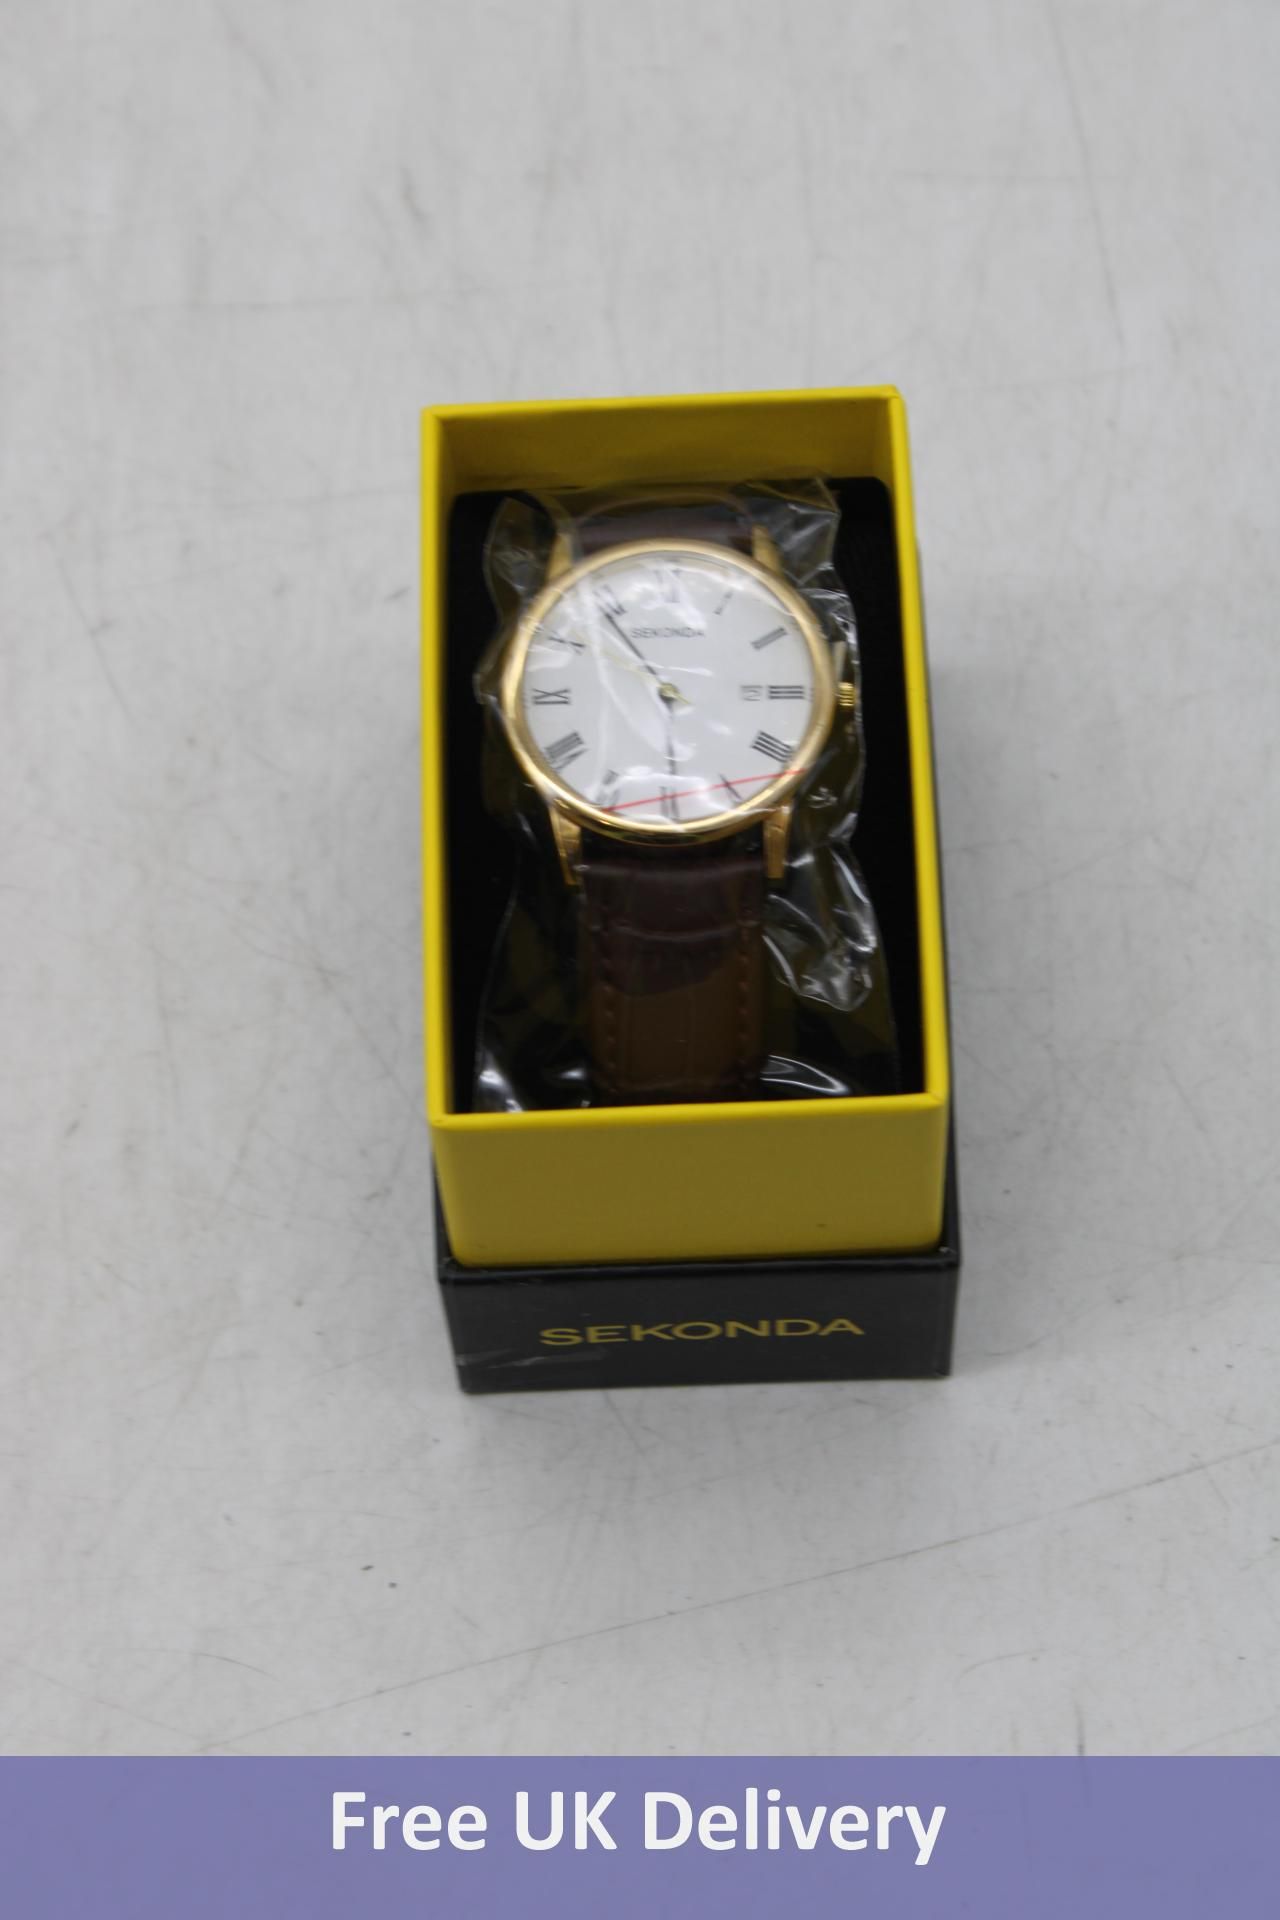 Sekonda Bracelet Watch, Brown/Gold, Size 41mm and Sekonda Quartz Watch with White Dial Analogue Disp